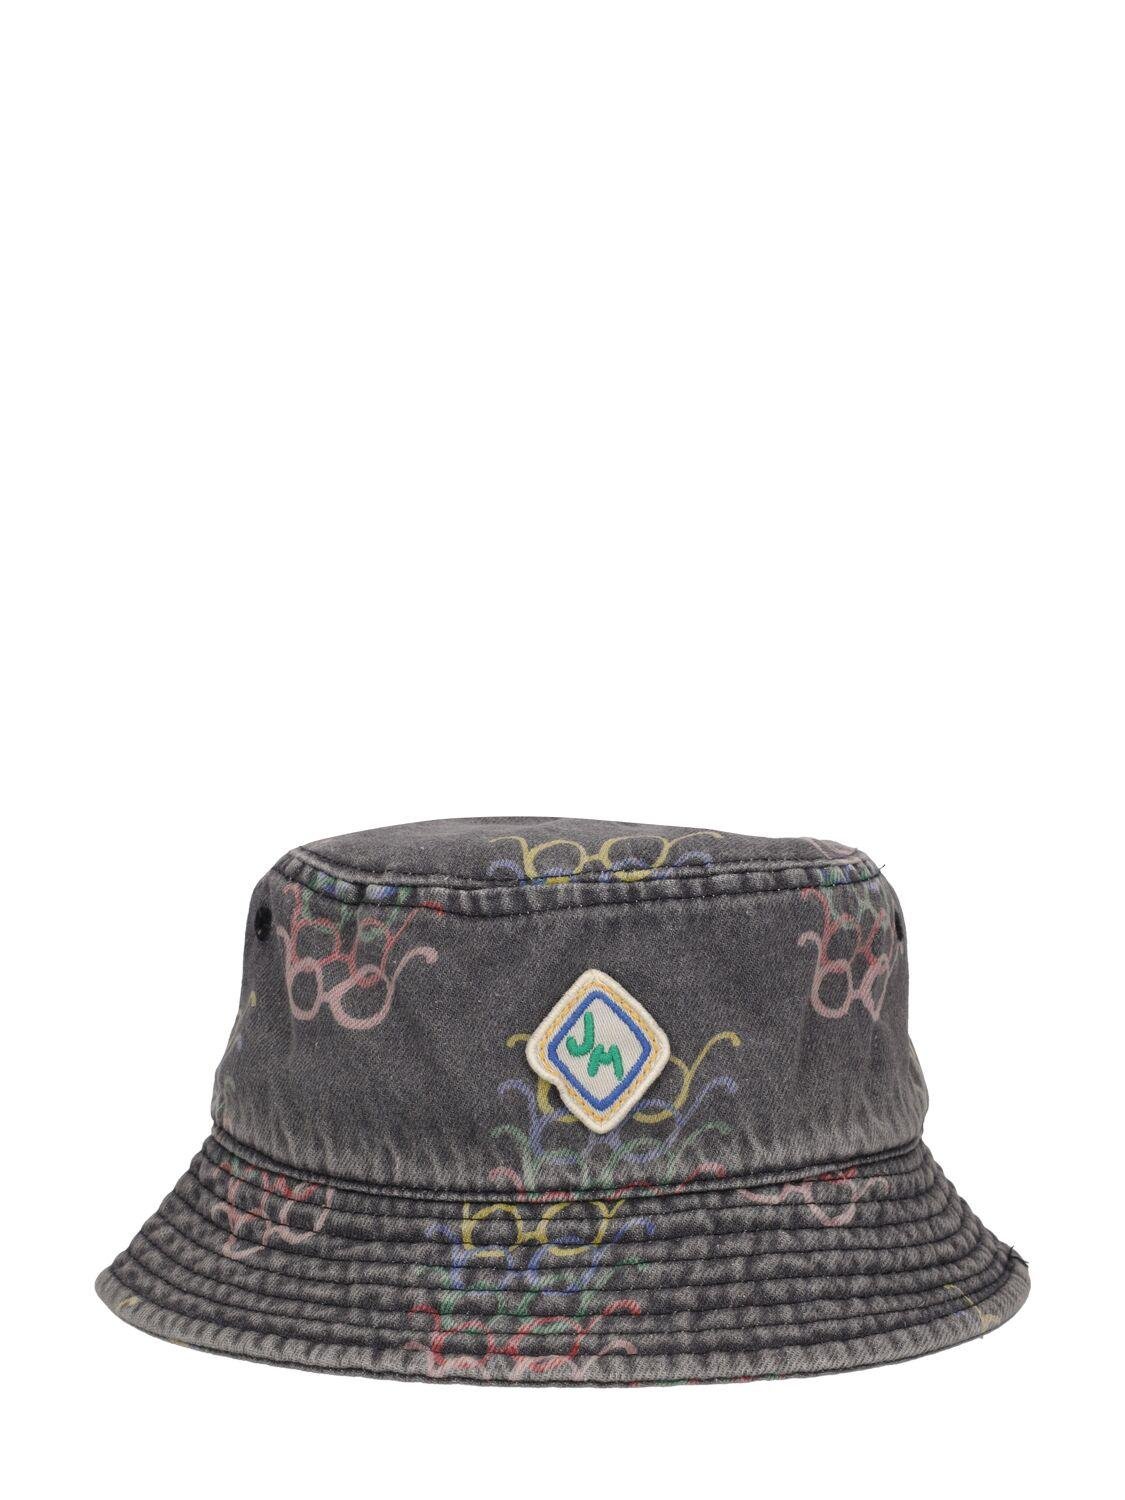 Printed Cotton Denim Bucket Hat by JELLYMALLOW